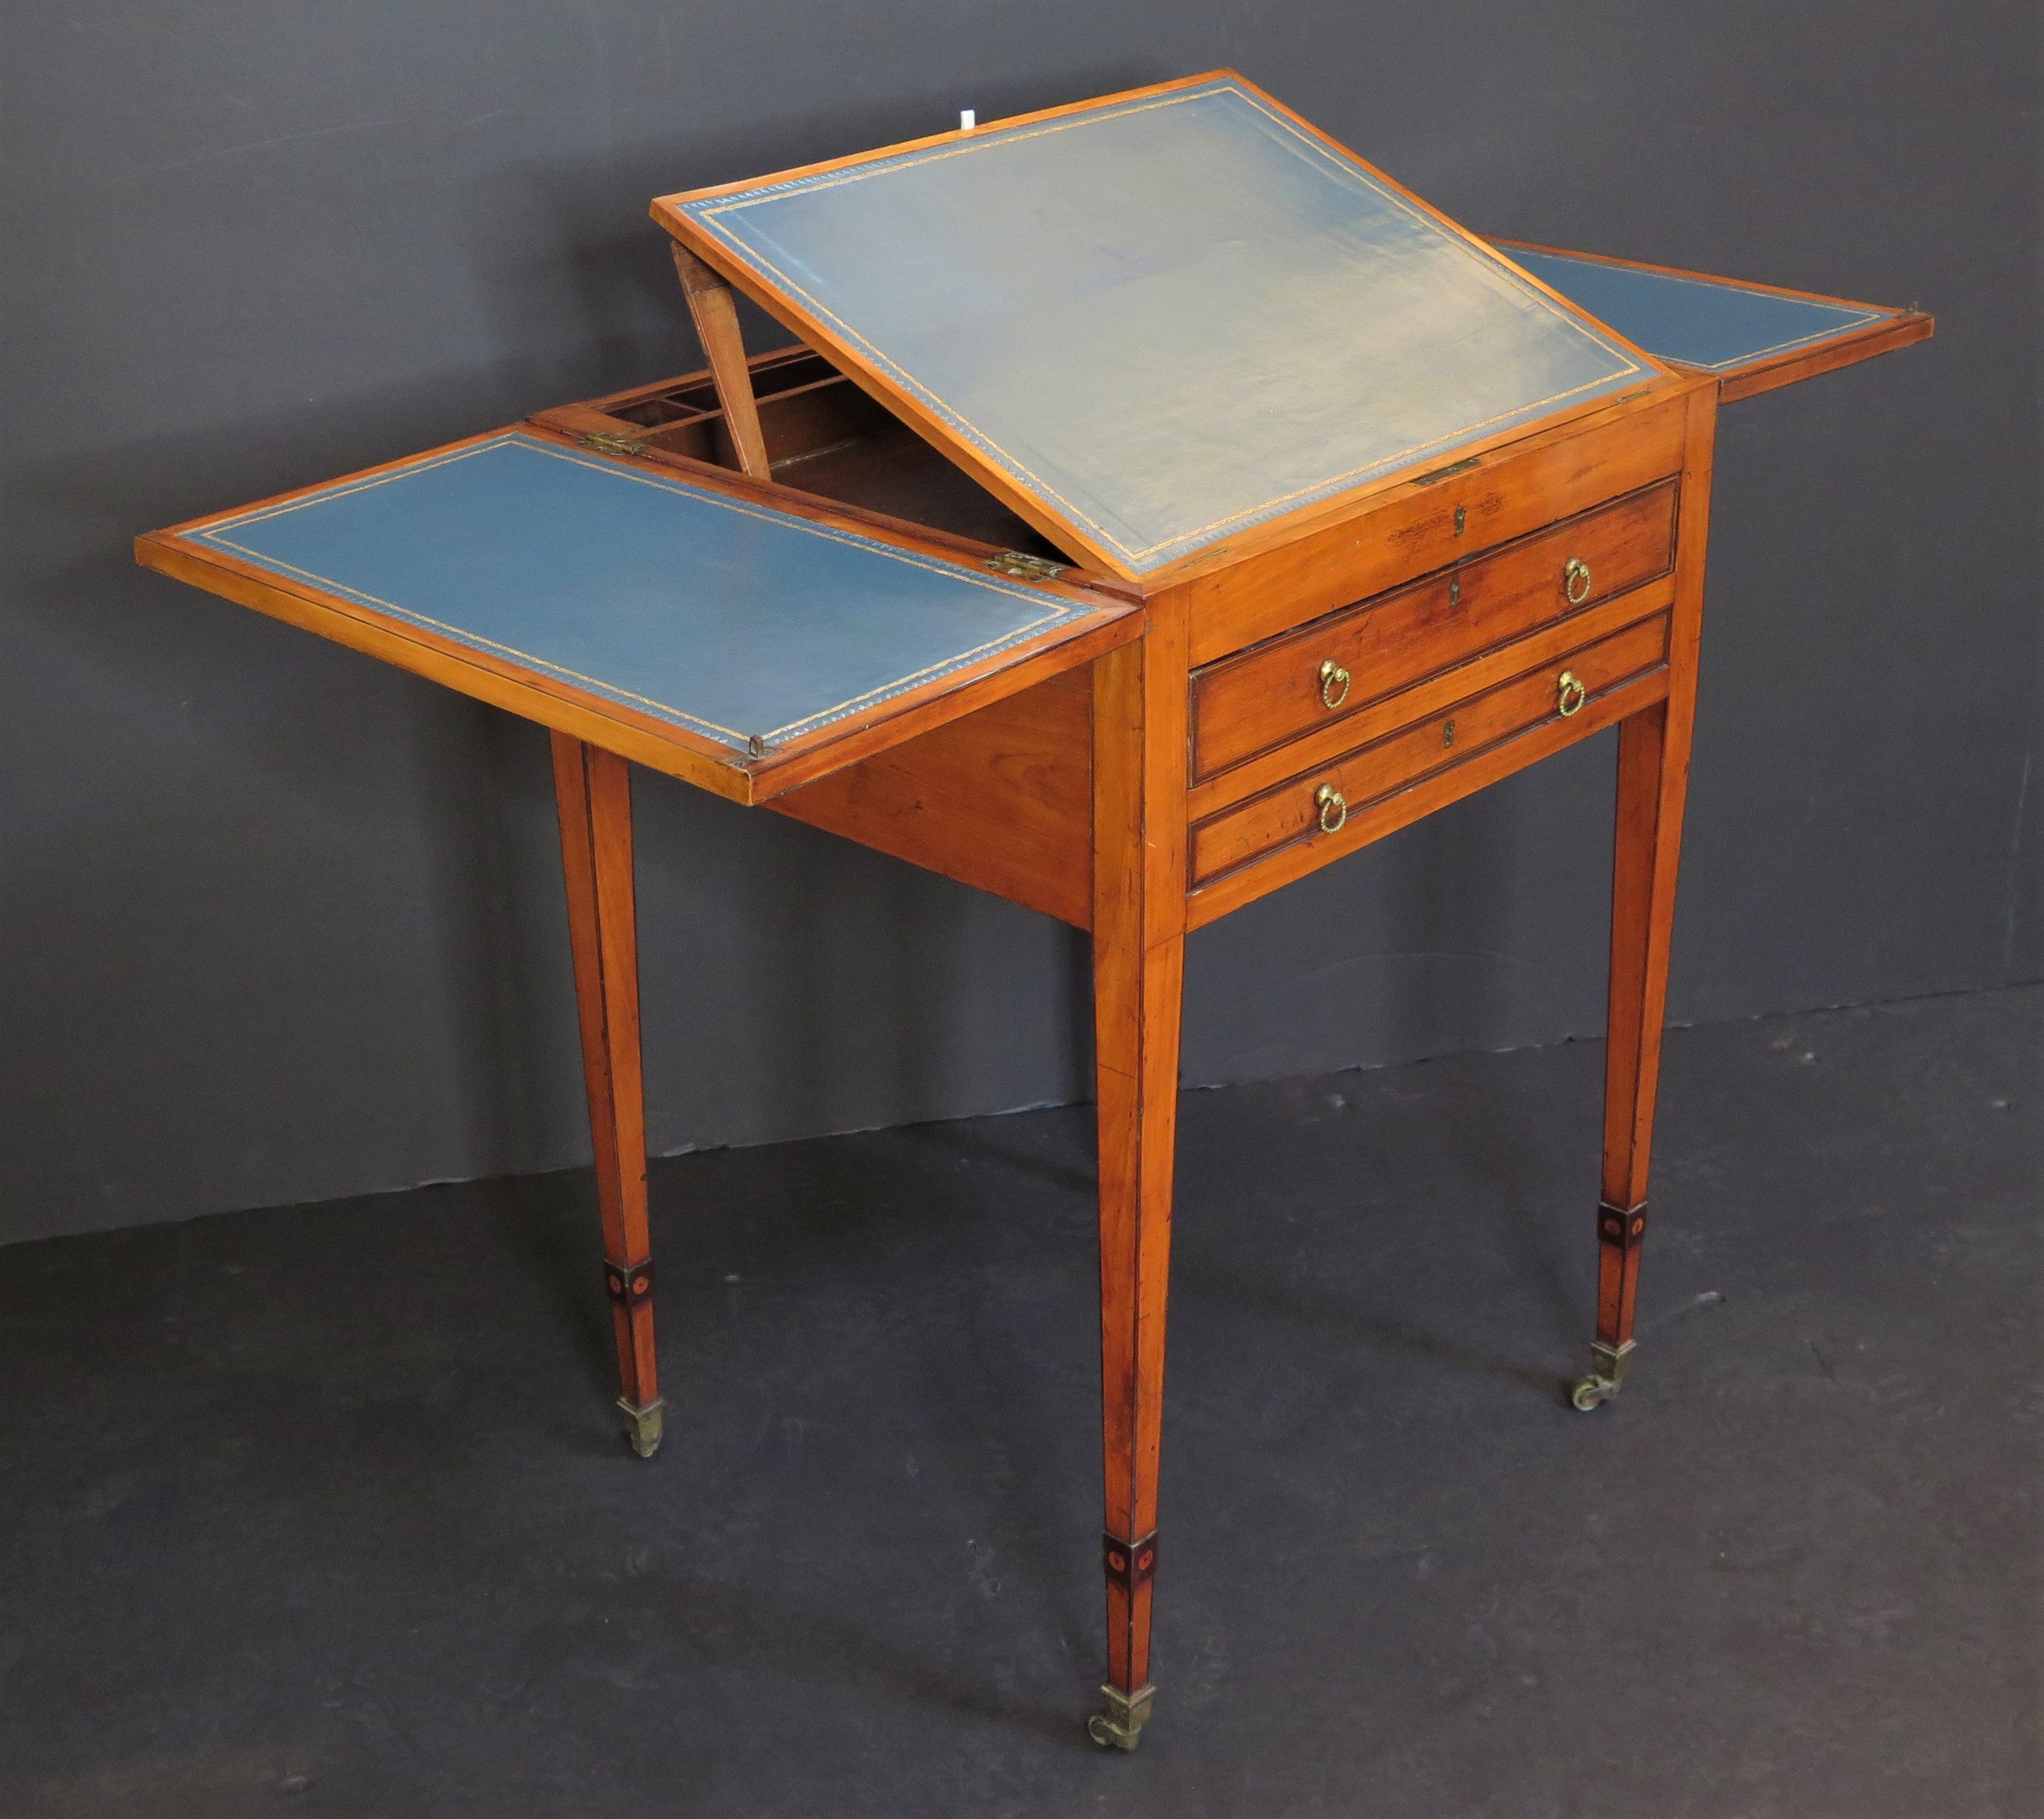 A Beautiful 18th Century English Mahogany Lady's Writing Desk